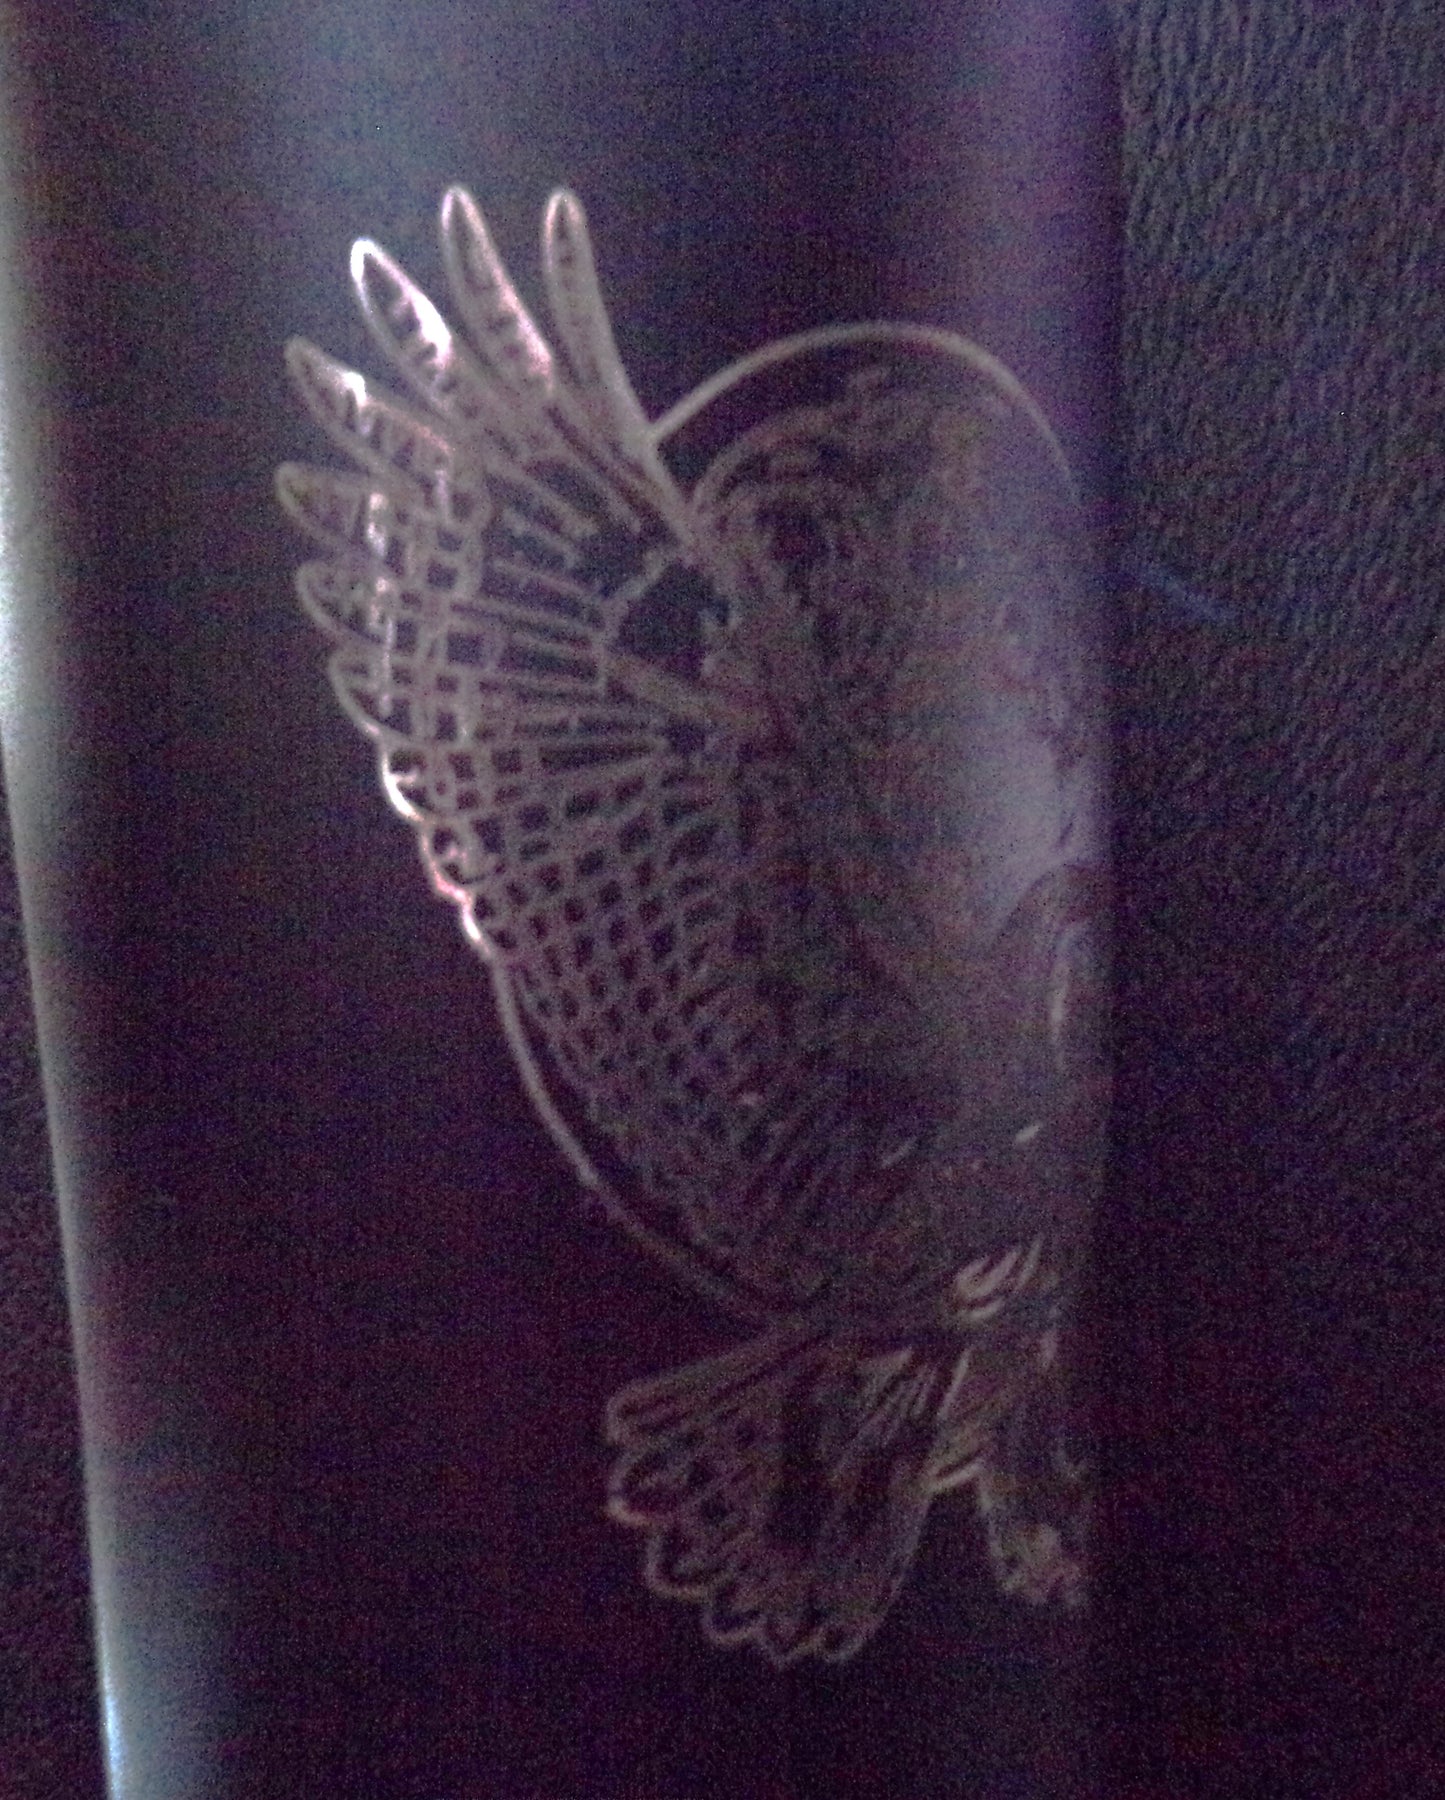 22oz Tumbler / Coffee Mug with lid Engraved Owl in flight